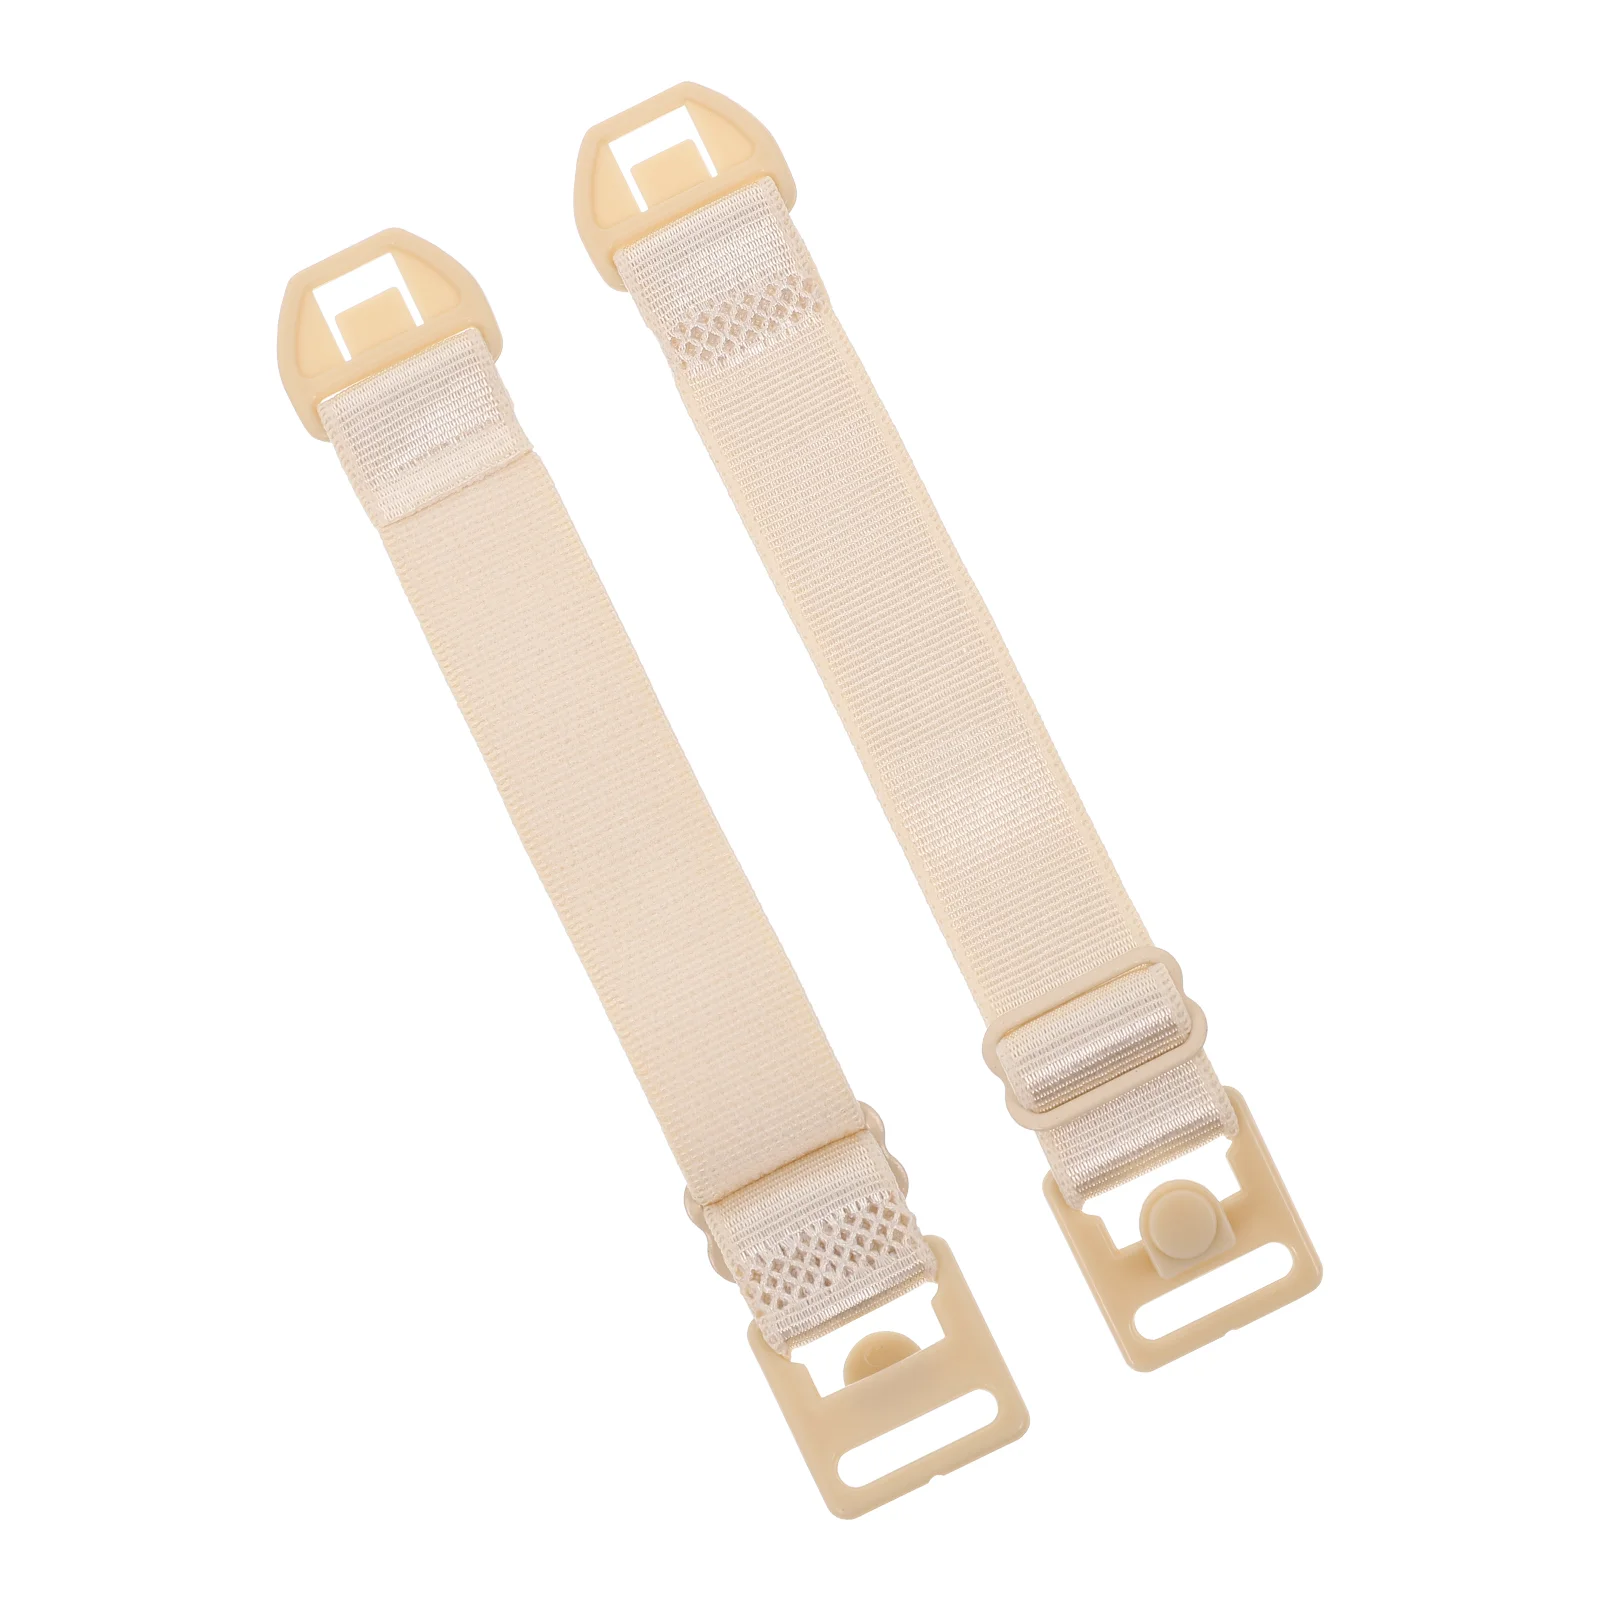 

2 Pcs Adjuster Brassiere Strap Adjustment Buckle Good Extender for Accessories Extension